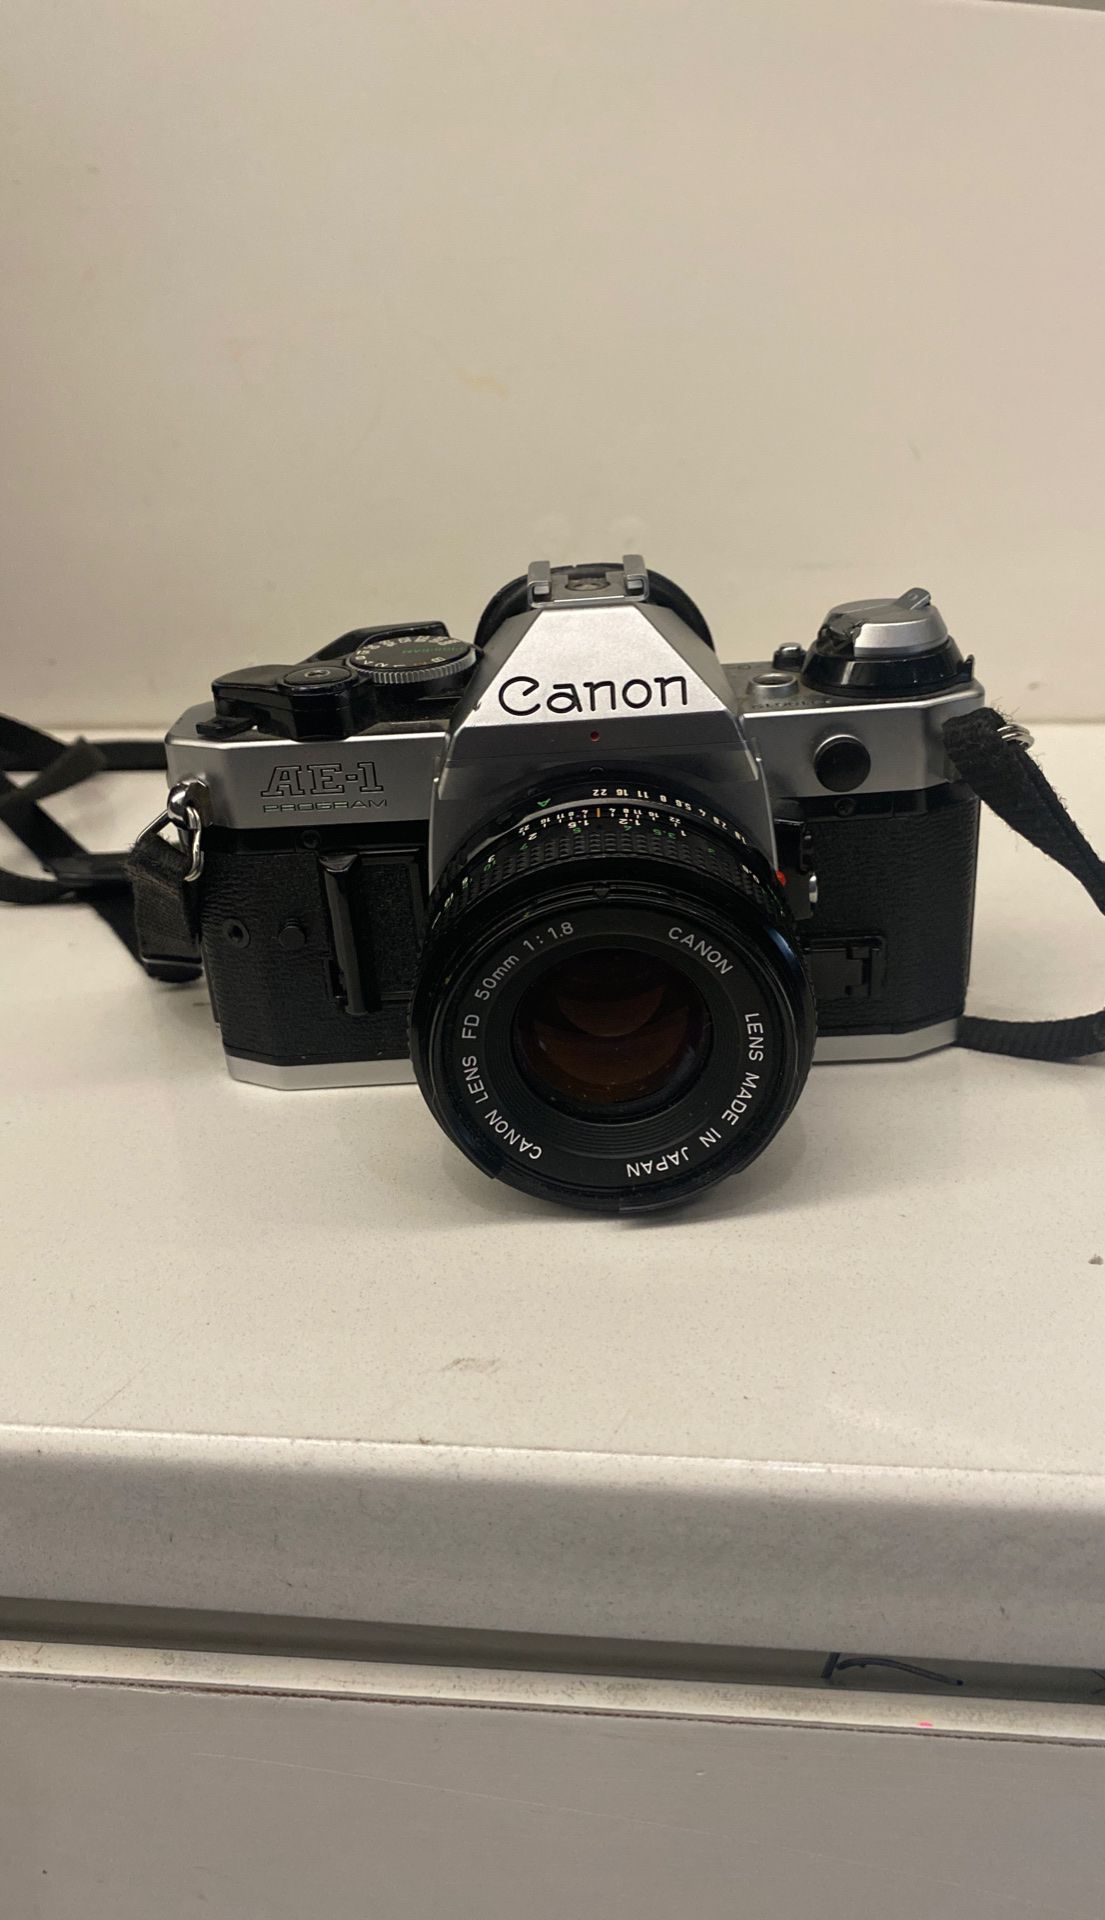 Canon ae-1 program